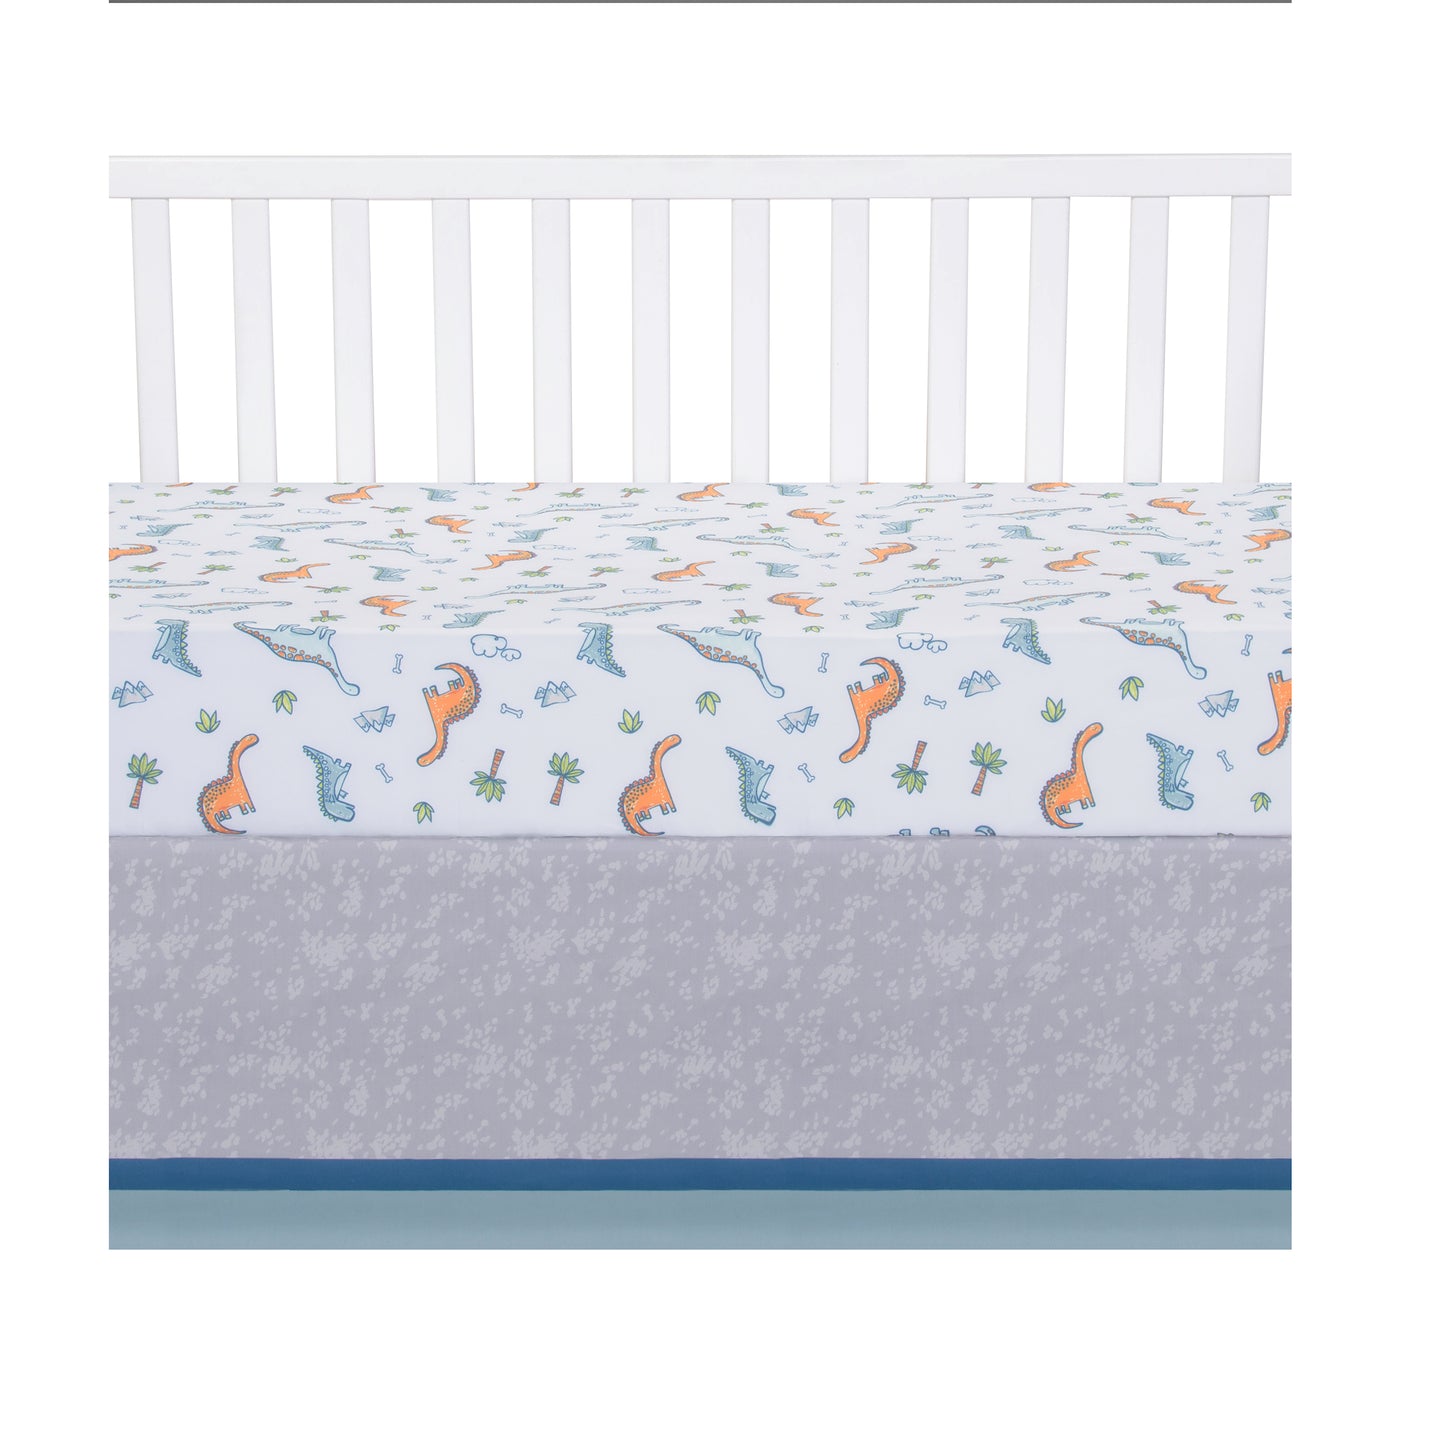  Dinosaur Million Years 4 Piece Crib Bedding Set by Sammy & Lou®; crib sheet and crib skirt